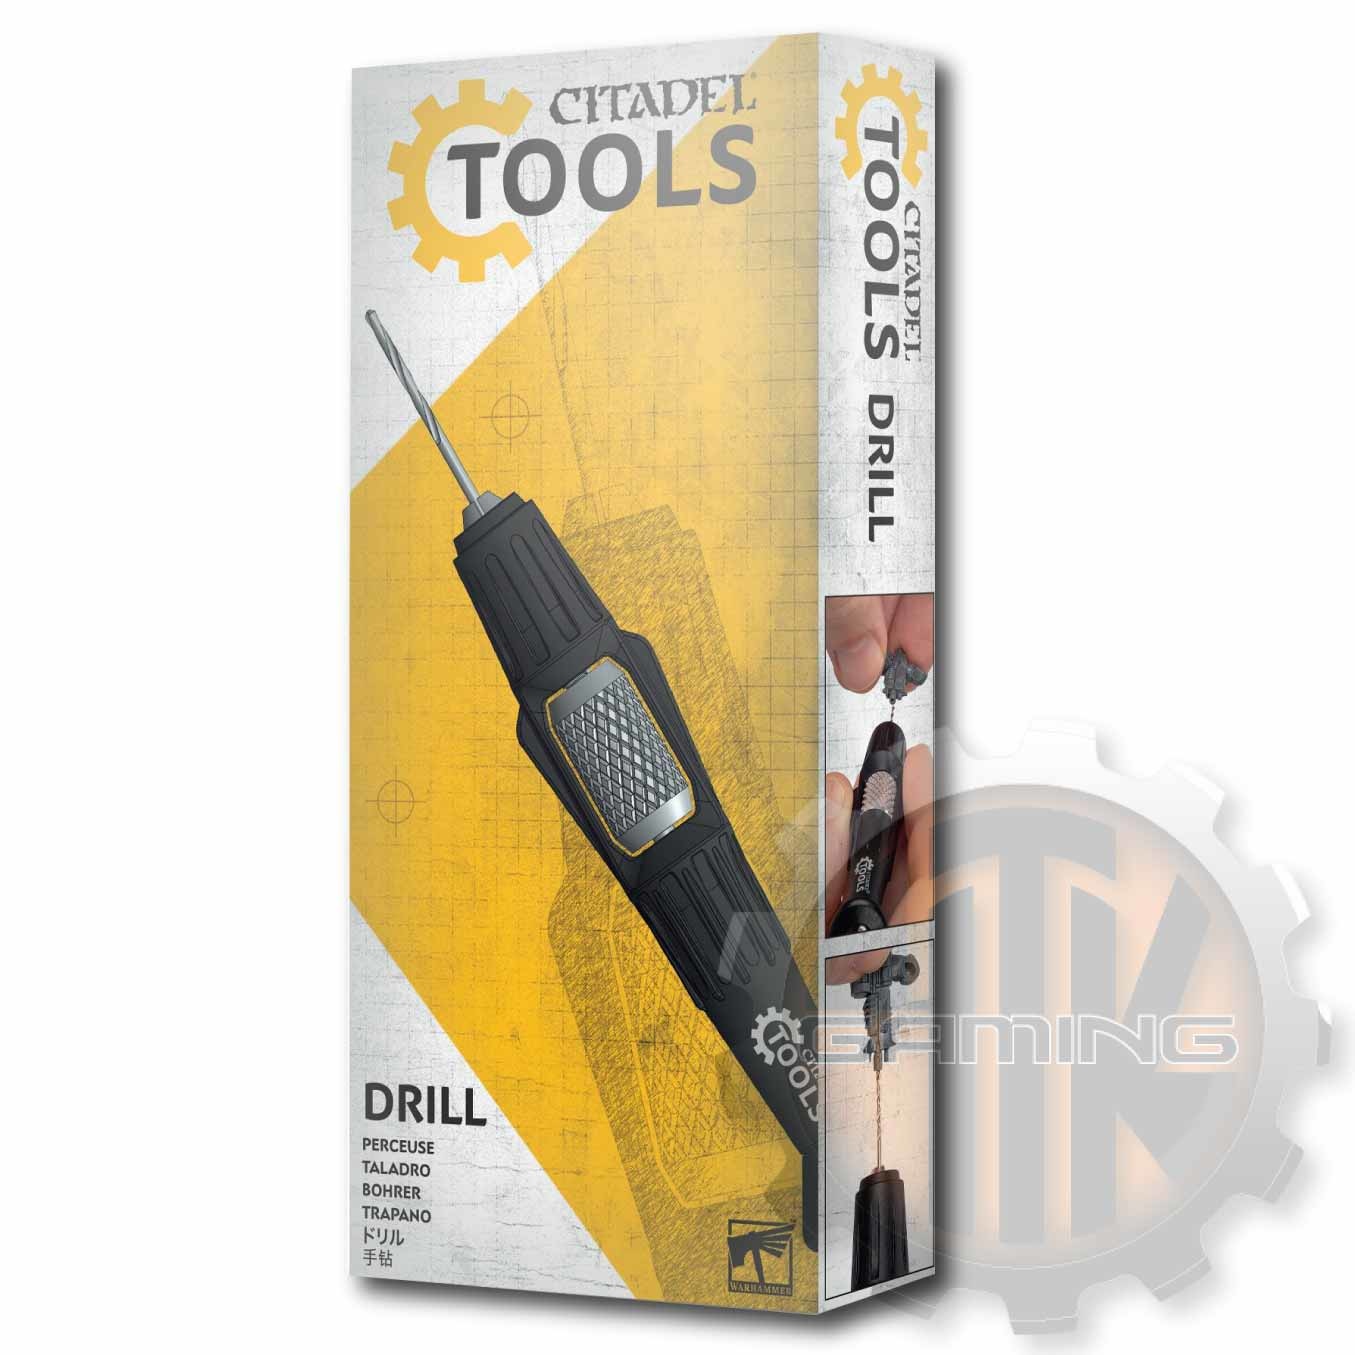 Citadel Tools: Drill - 4Tk Gaming